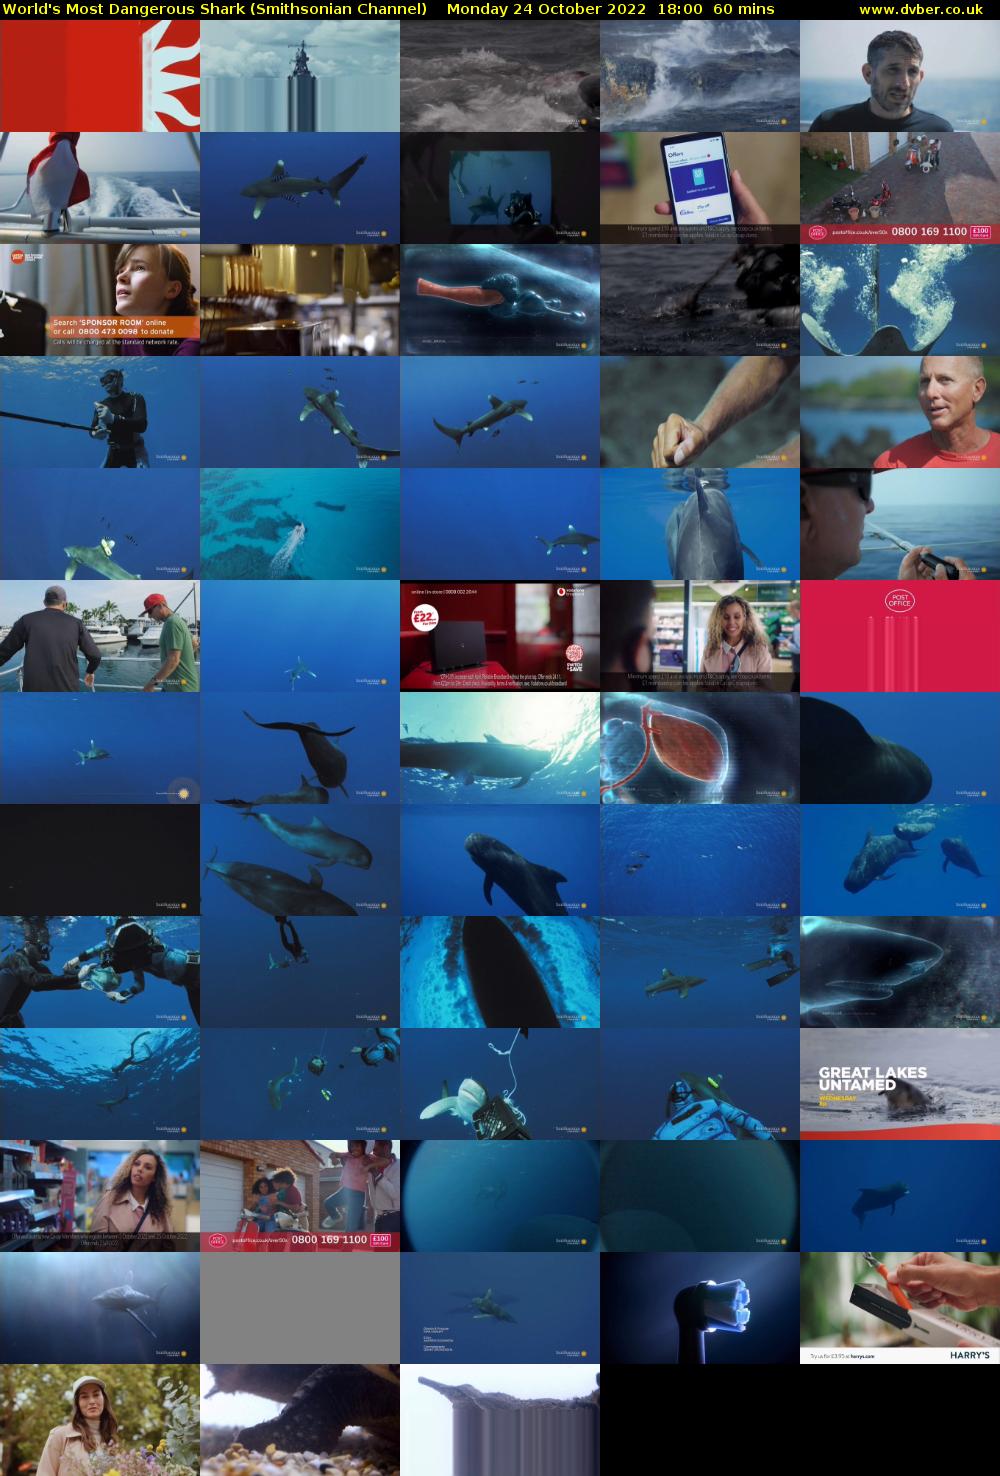 World's Most Dangerous Shark (Smithsonian Channel) Monday 24 October 2022 18:00 - 19:00